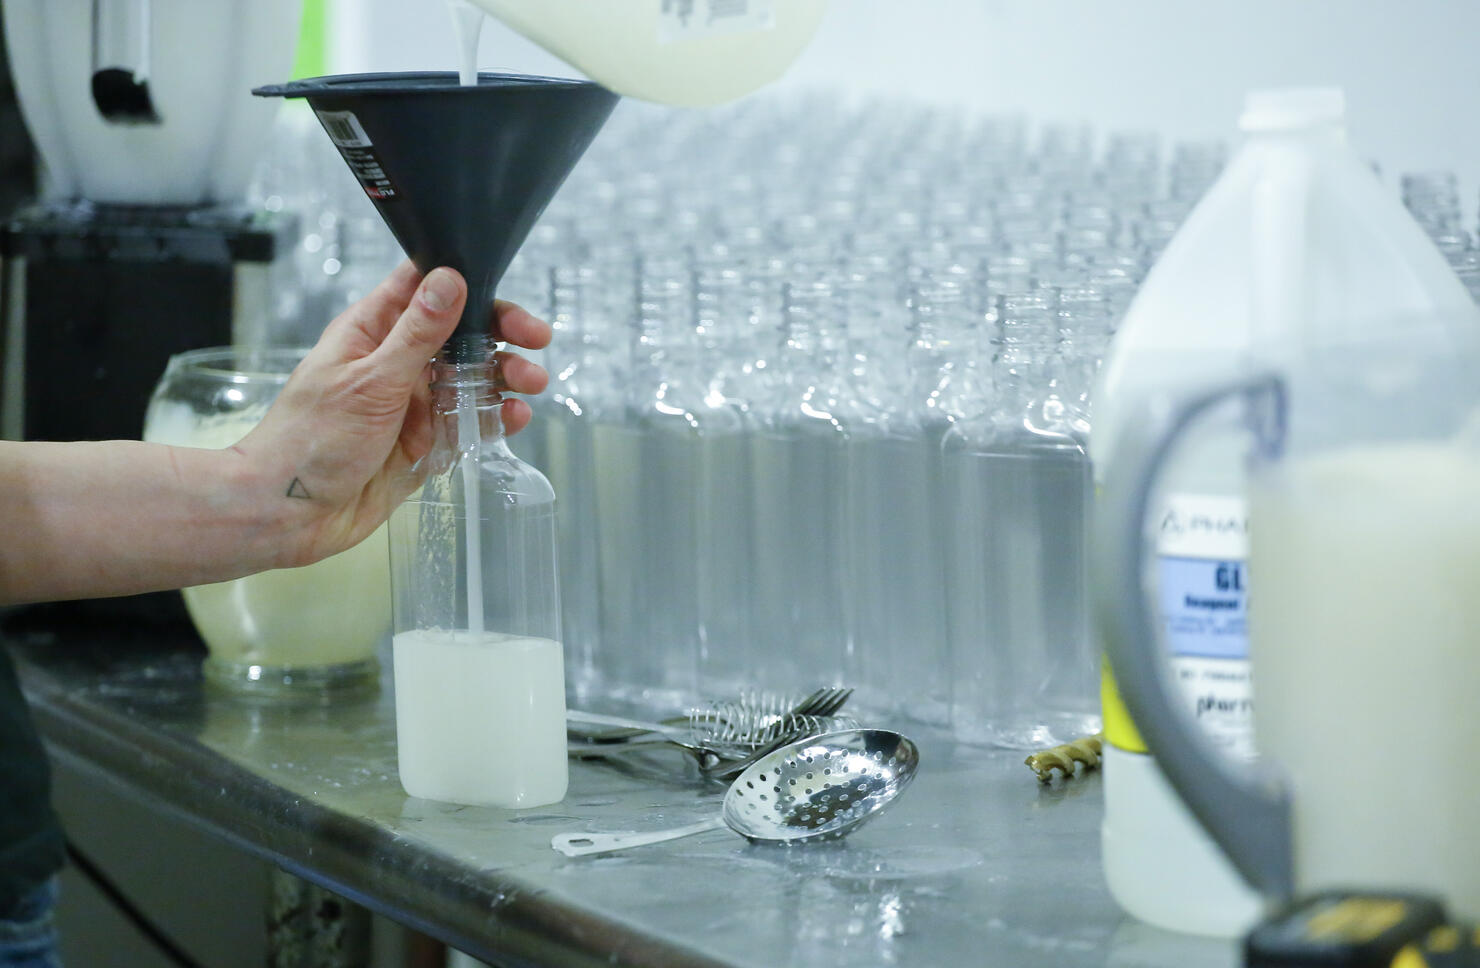 New Jersey Liquor Distillery Converts To Producing Hand Sanitizer During Coronavirus Outbreak